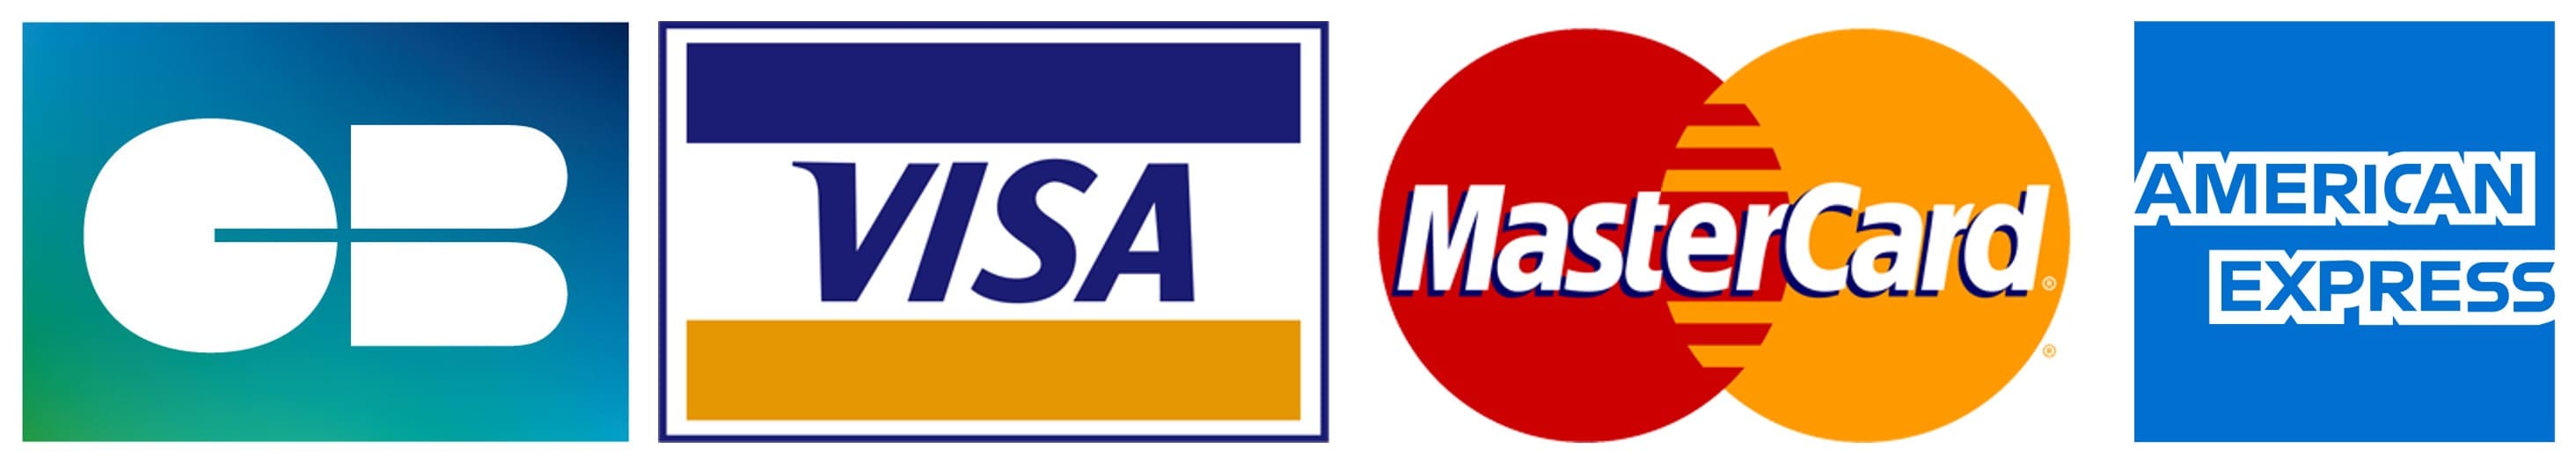 CB -Mastercard- Visa- Amex